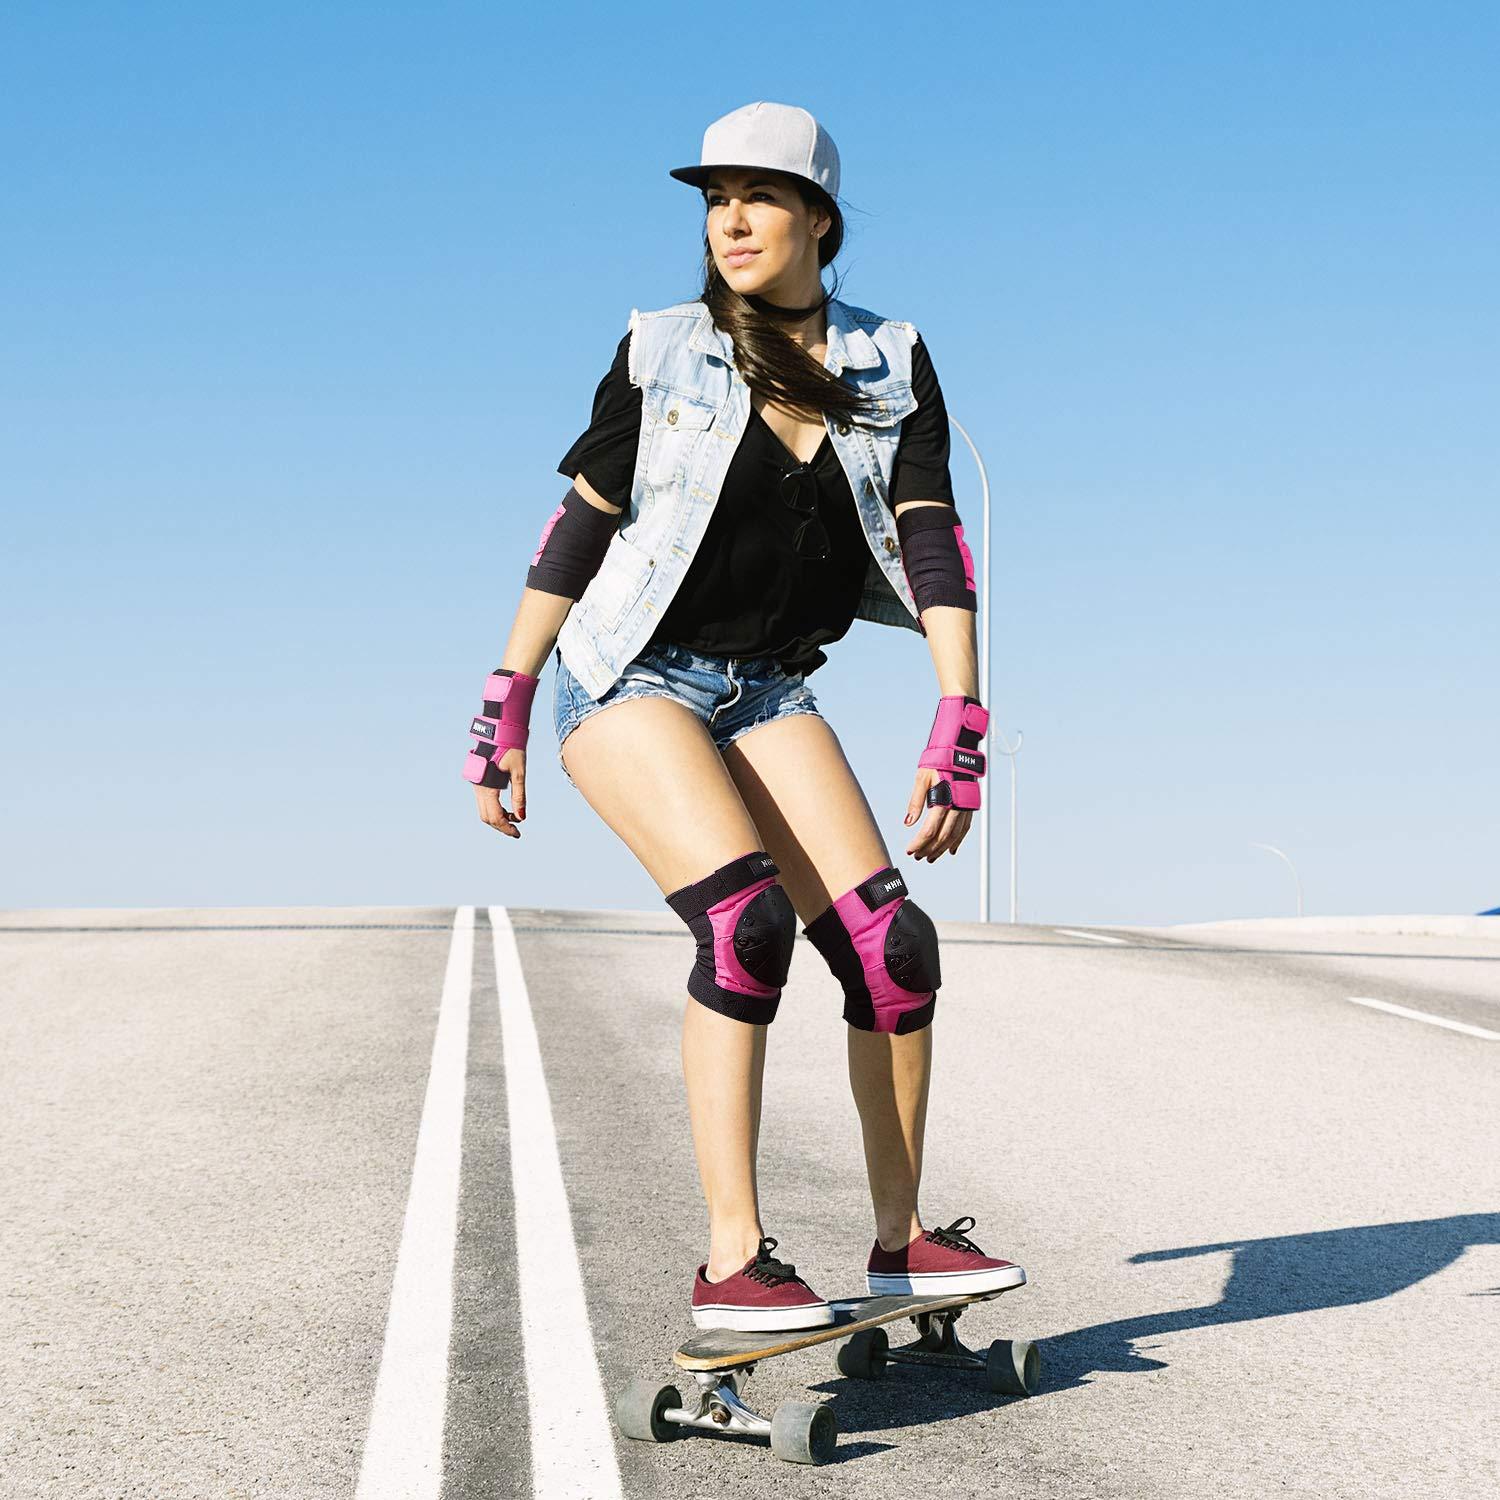 Nhh Skateboard Knee Pads Set 6 in 1 Protective Gear Set Knee